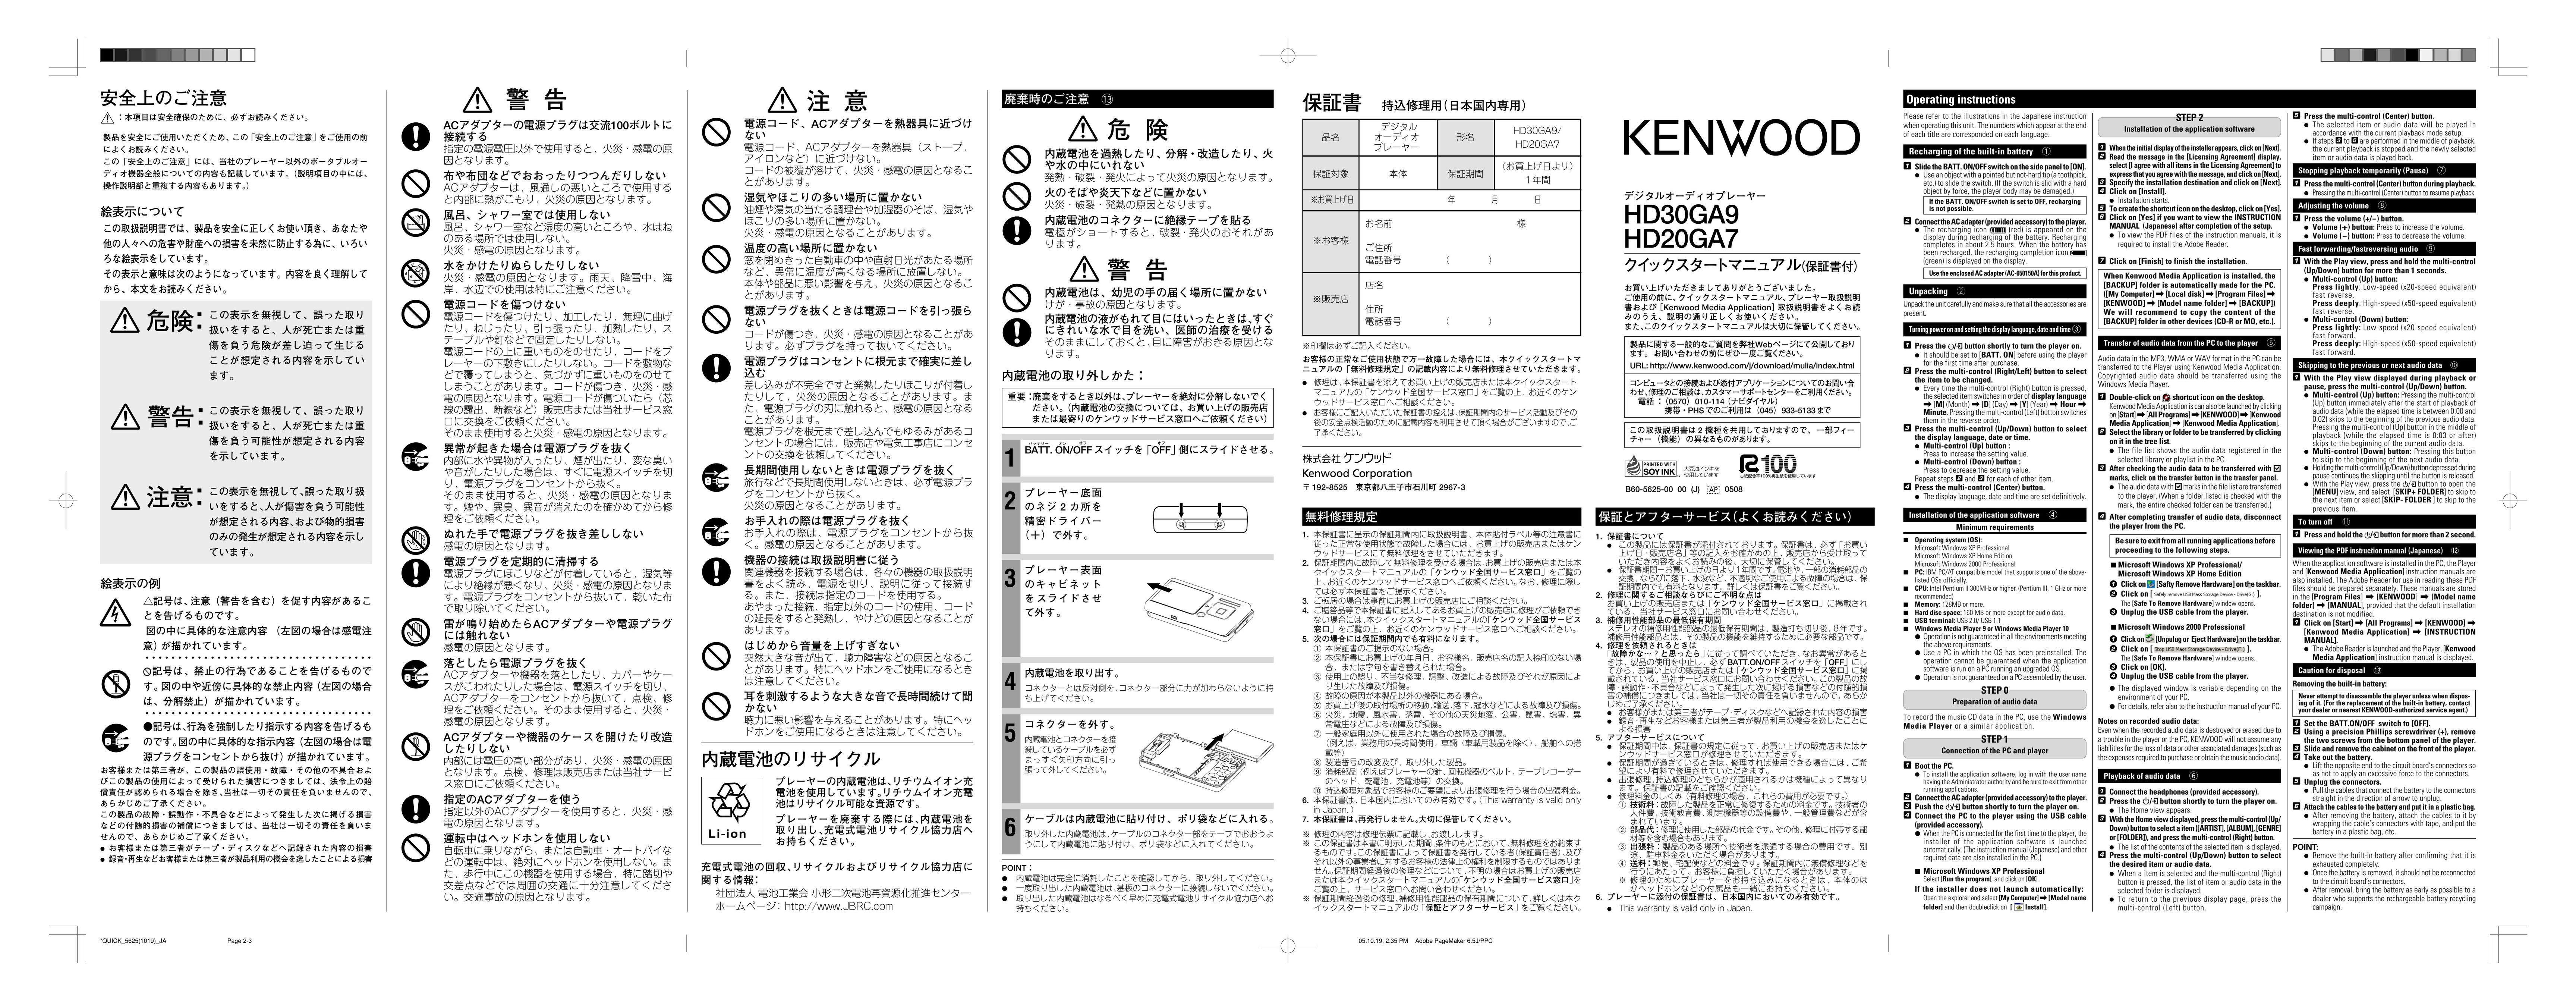 Kenwood HD30GA9 MP3 Player User Manual